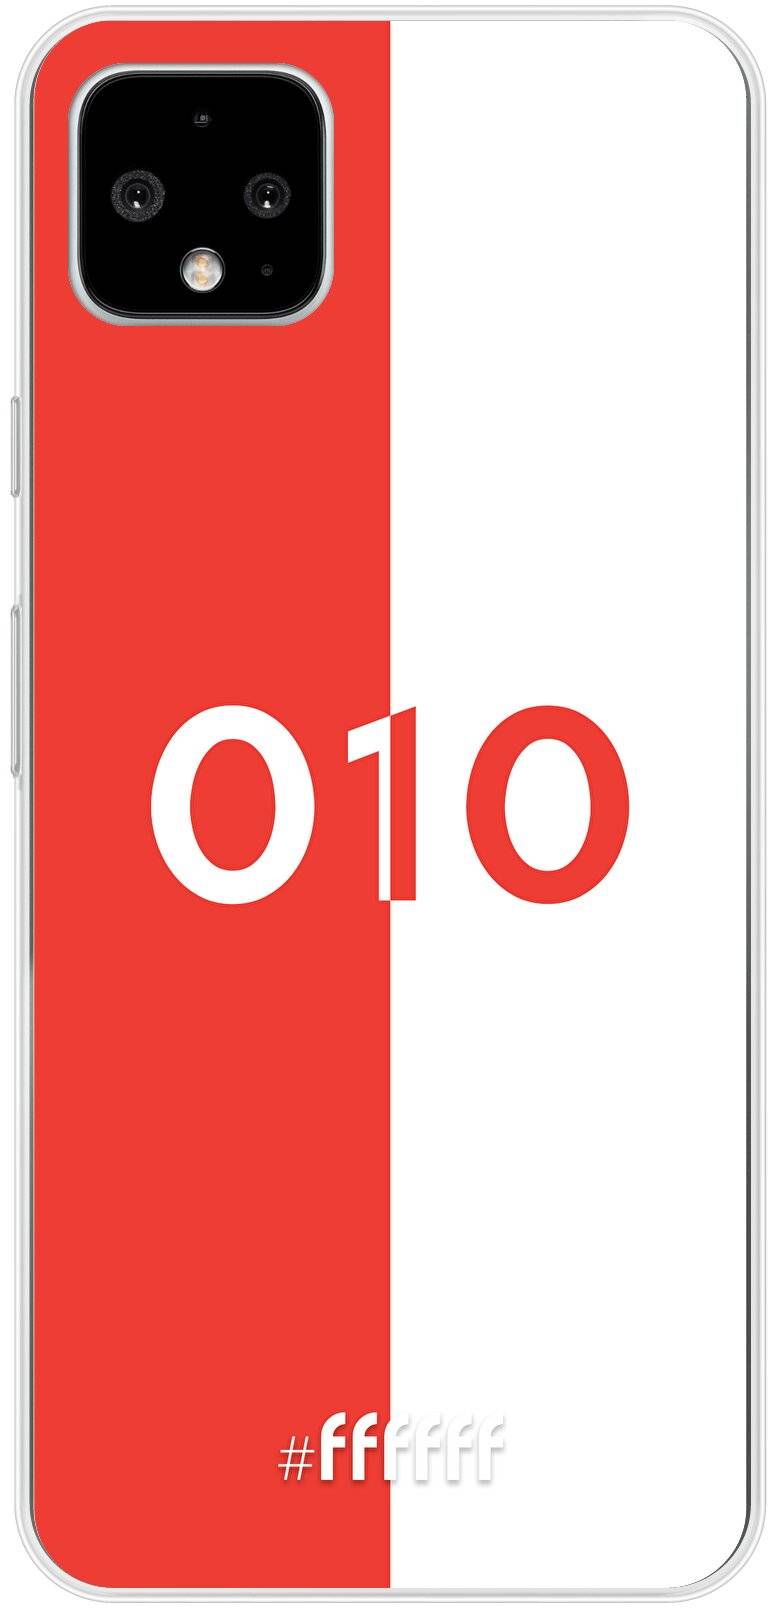 Feyenoord - 010 Pixel 4 XL